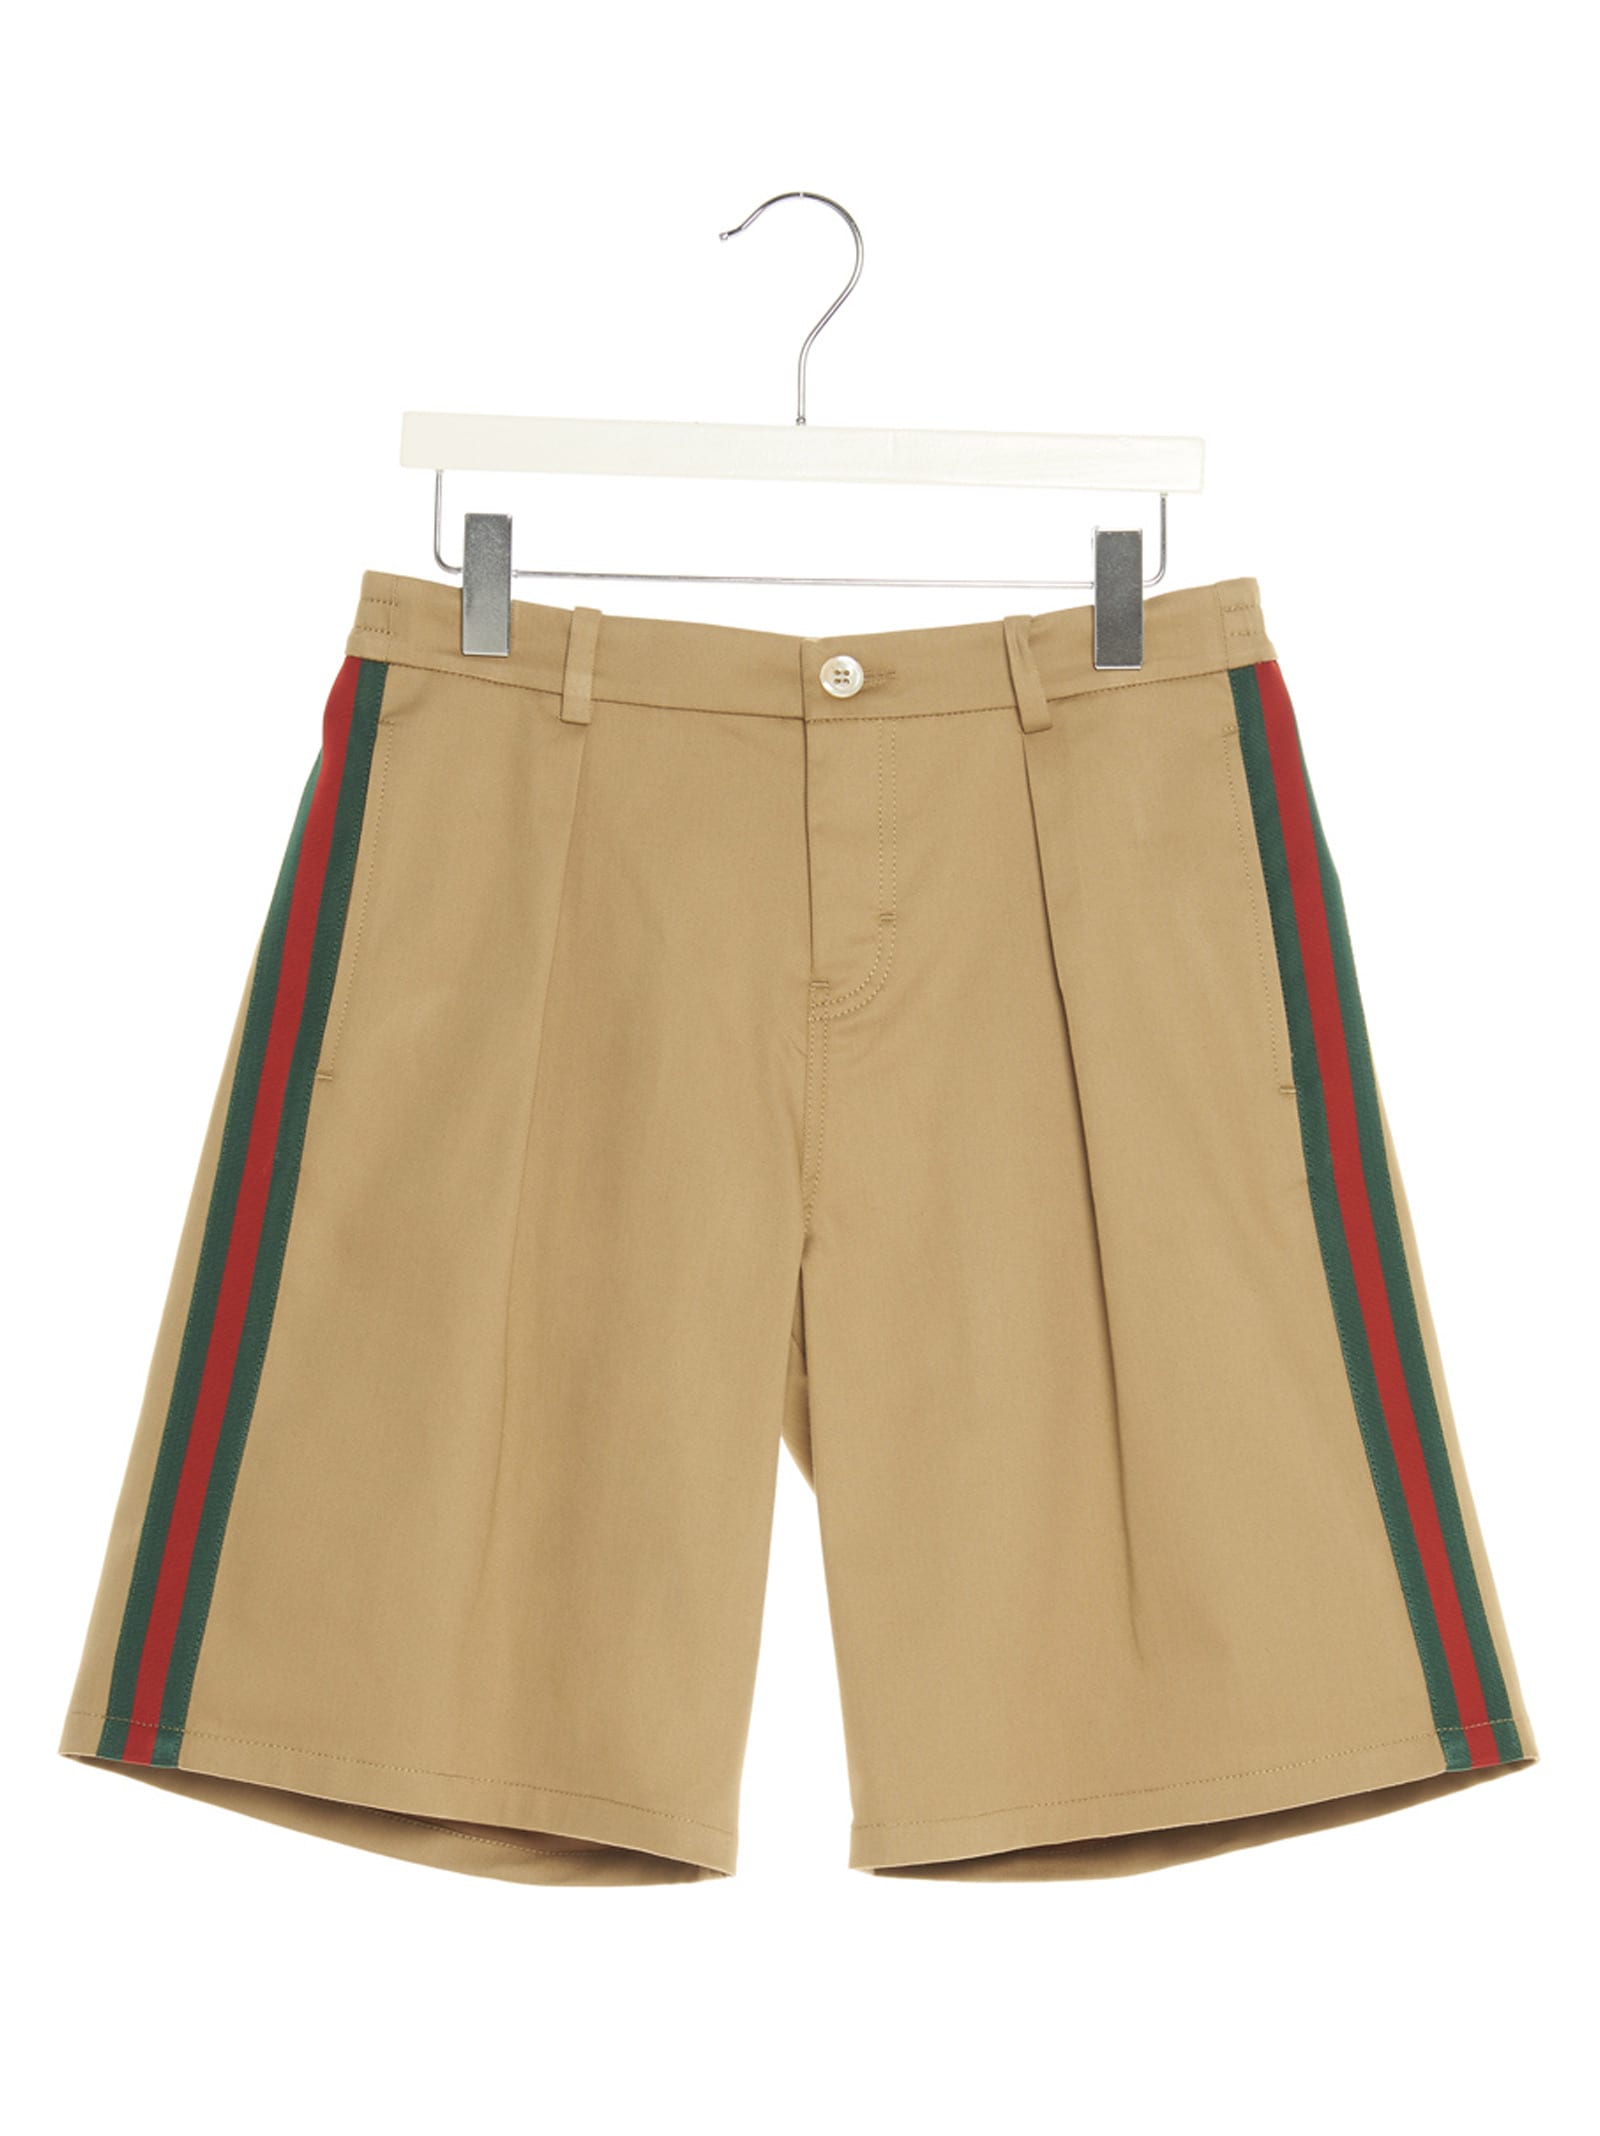 gucci shorts price